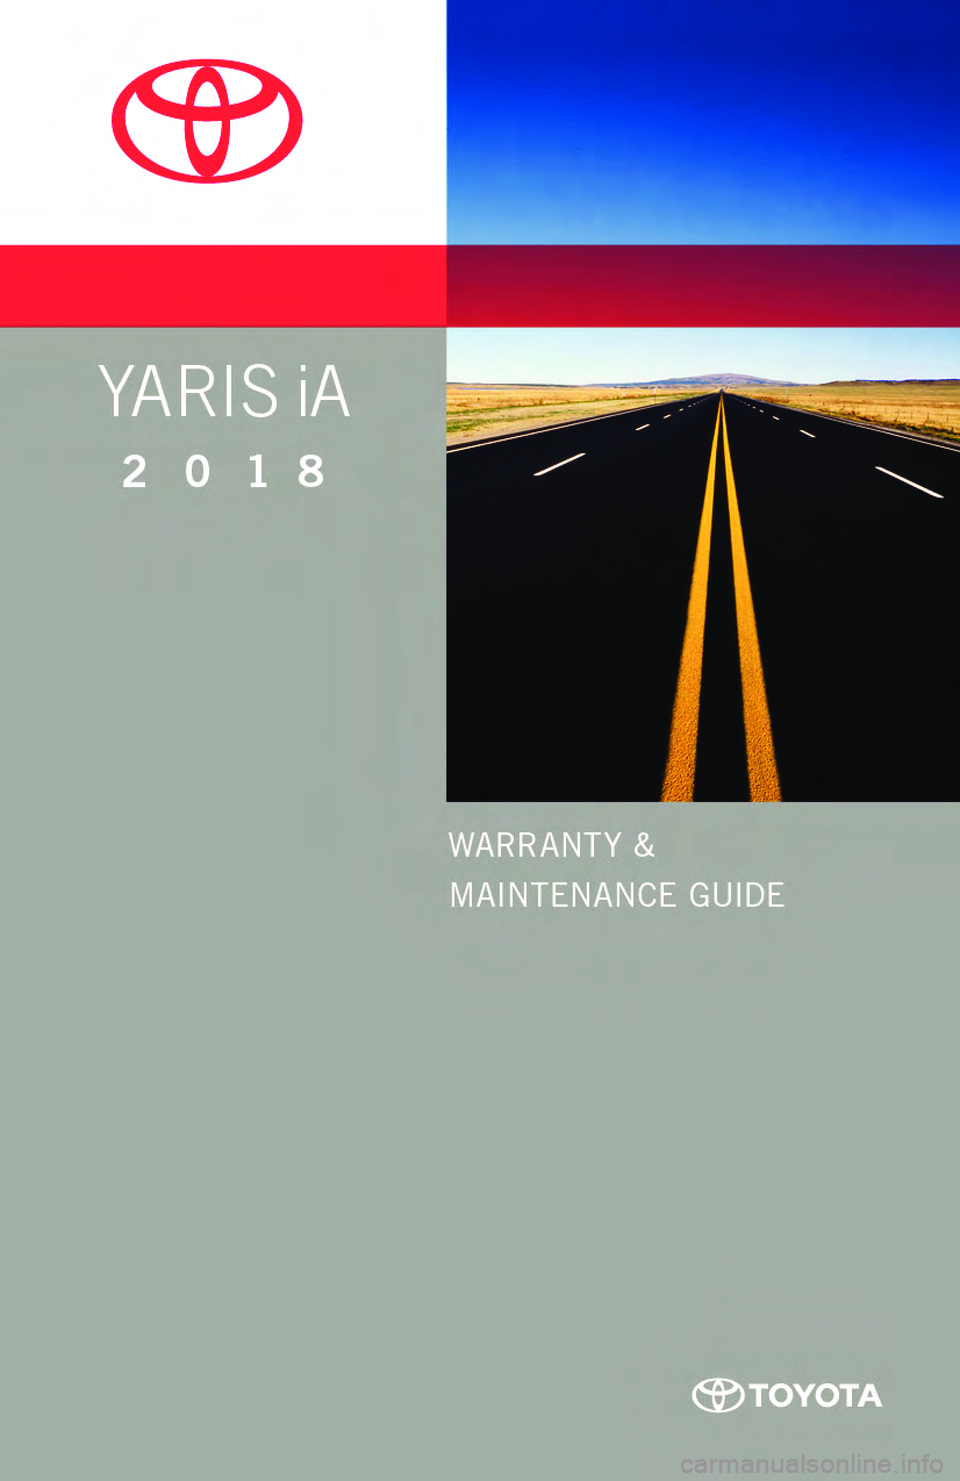 TOYOTA YARIS iA 2018  Warranties & Maintenance Guides (in English) 